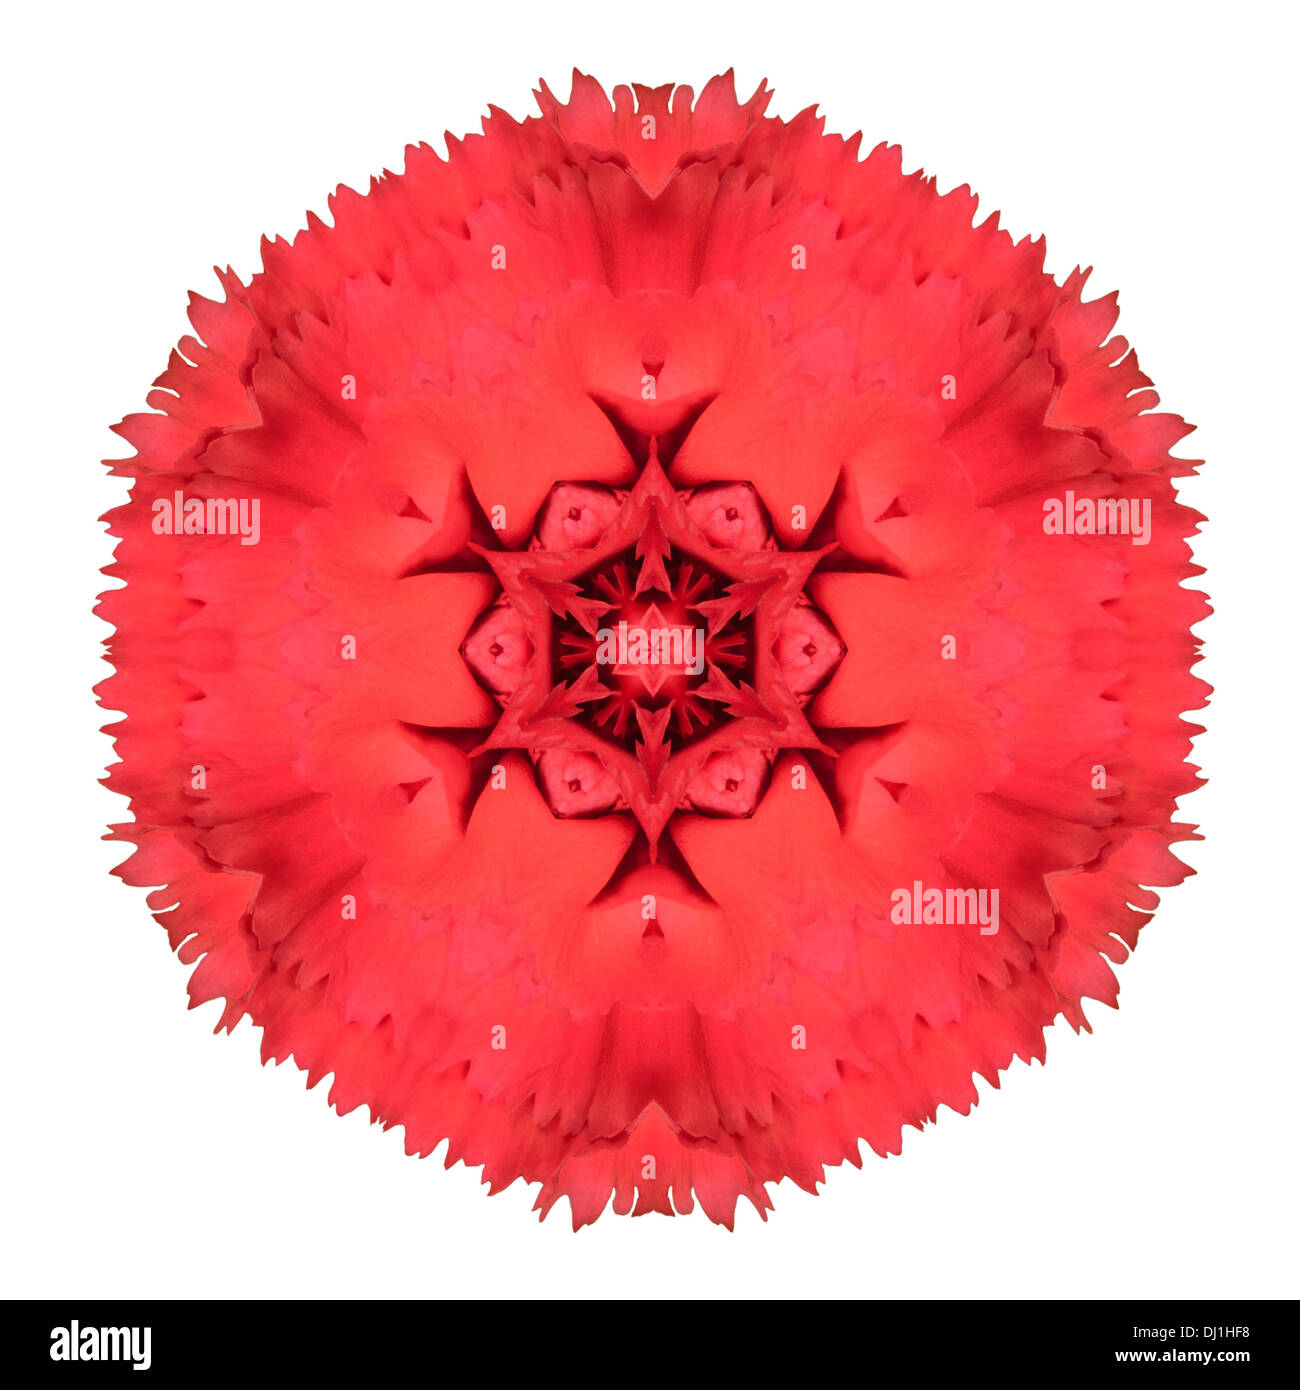 Rote Nelke Mandala Blume kaleidoskopischen Isolated on White Background Stockfoto